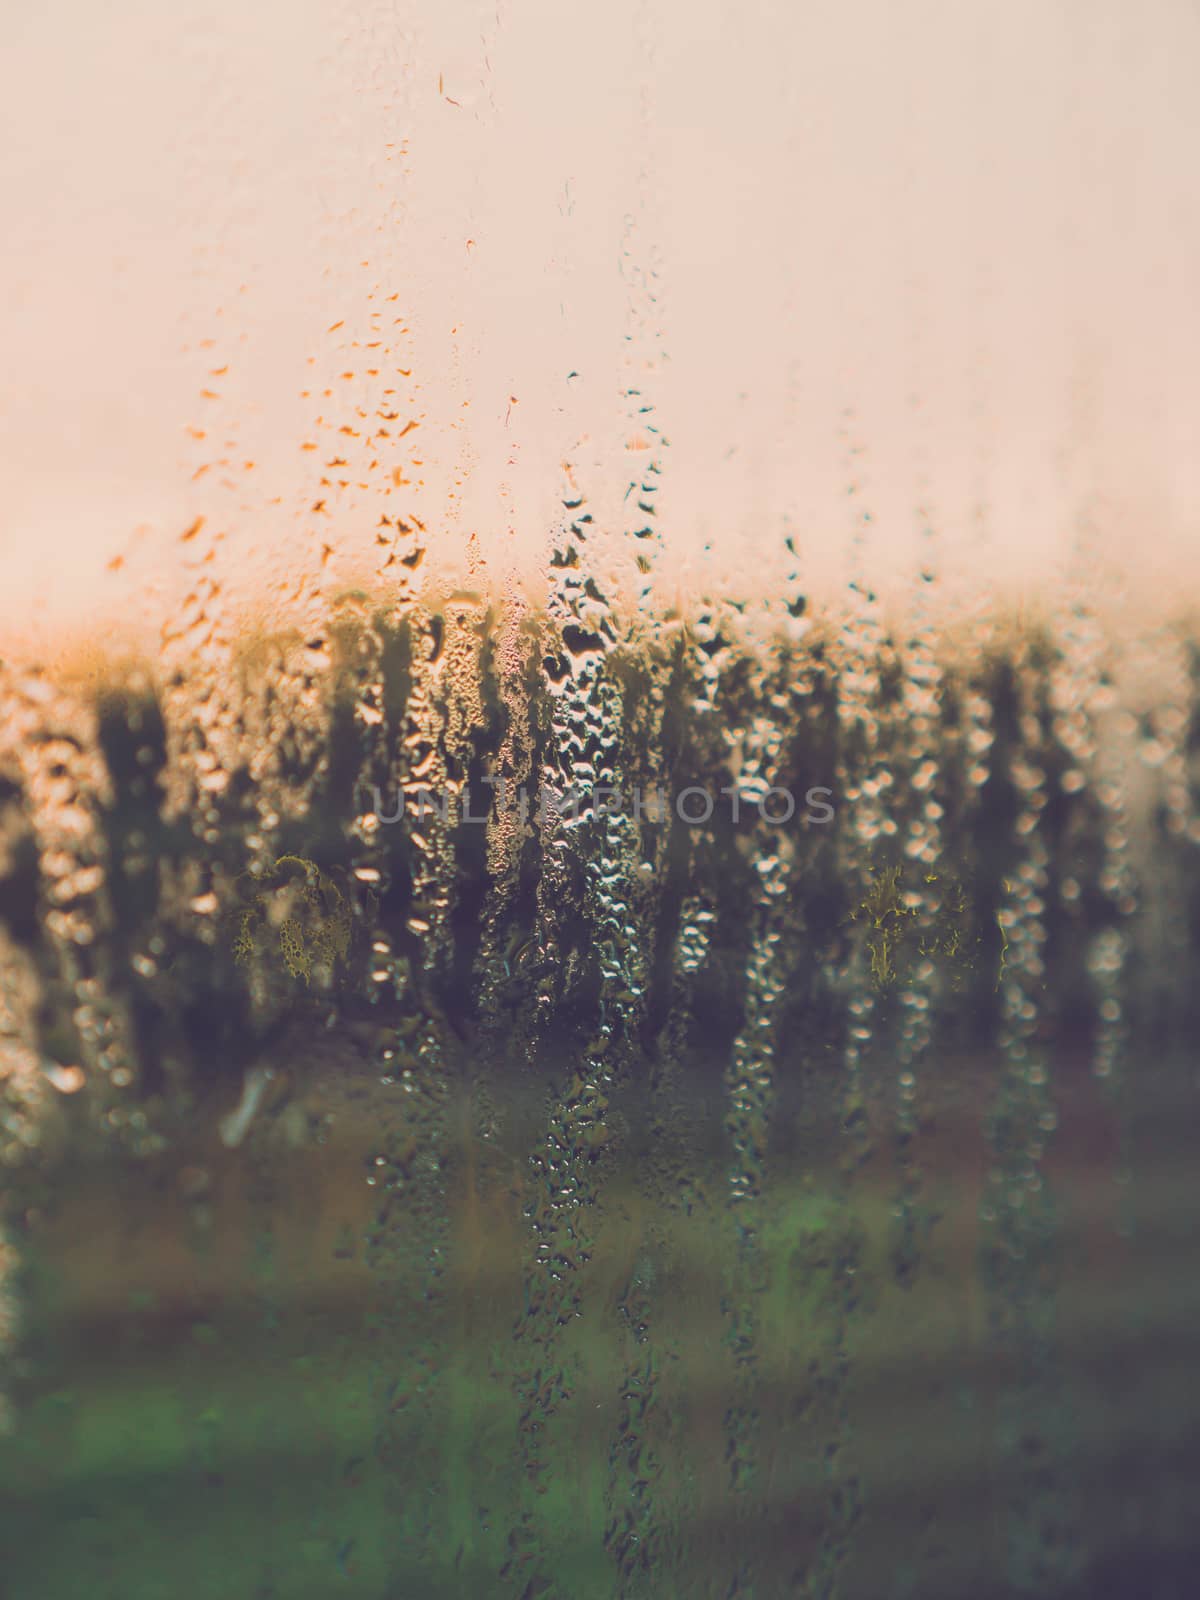 Raindrops on the glass window.